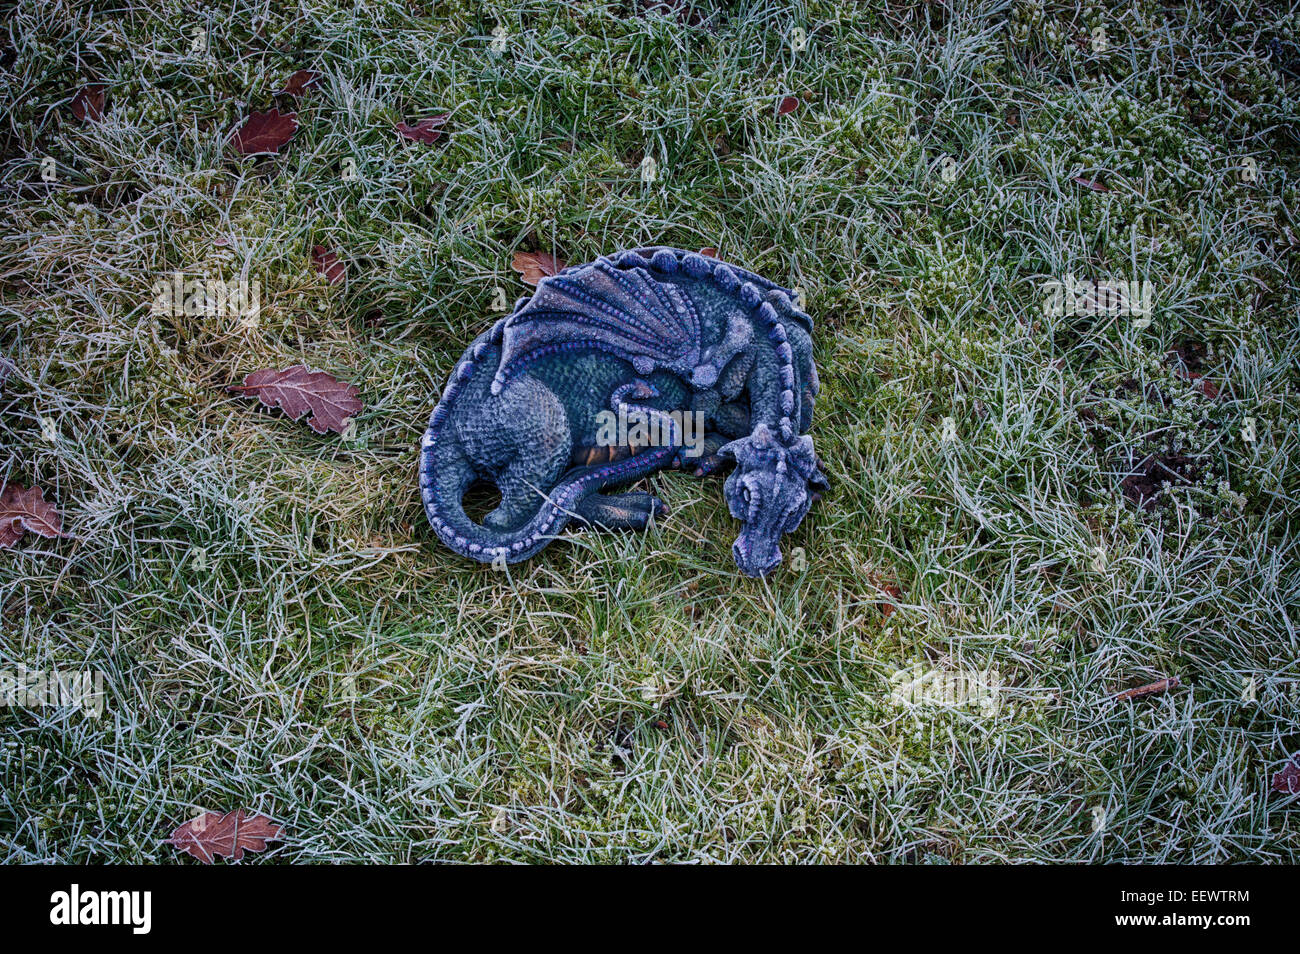 Sleeping Dragon glacial sur l'herbe Banque D'Images